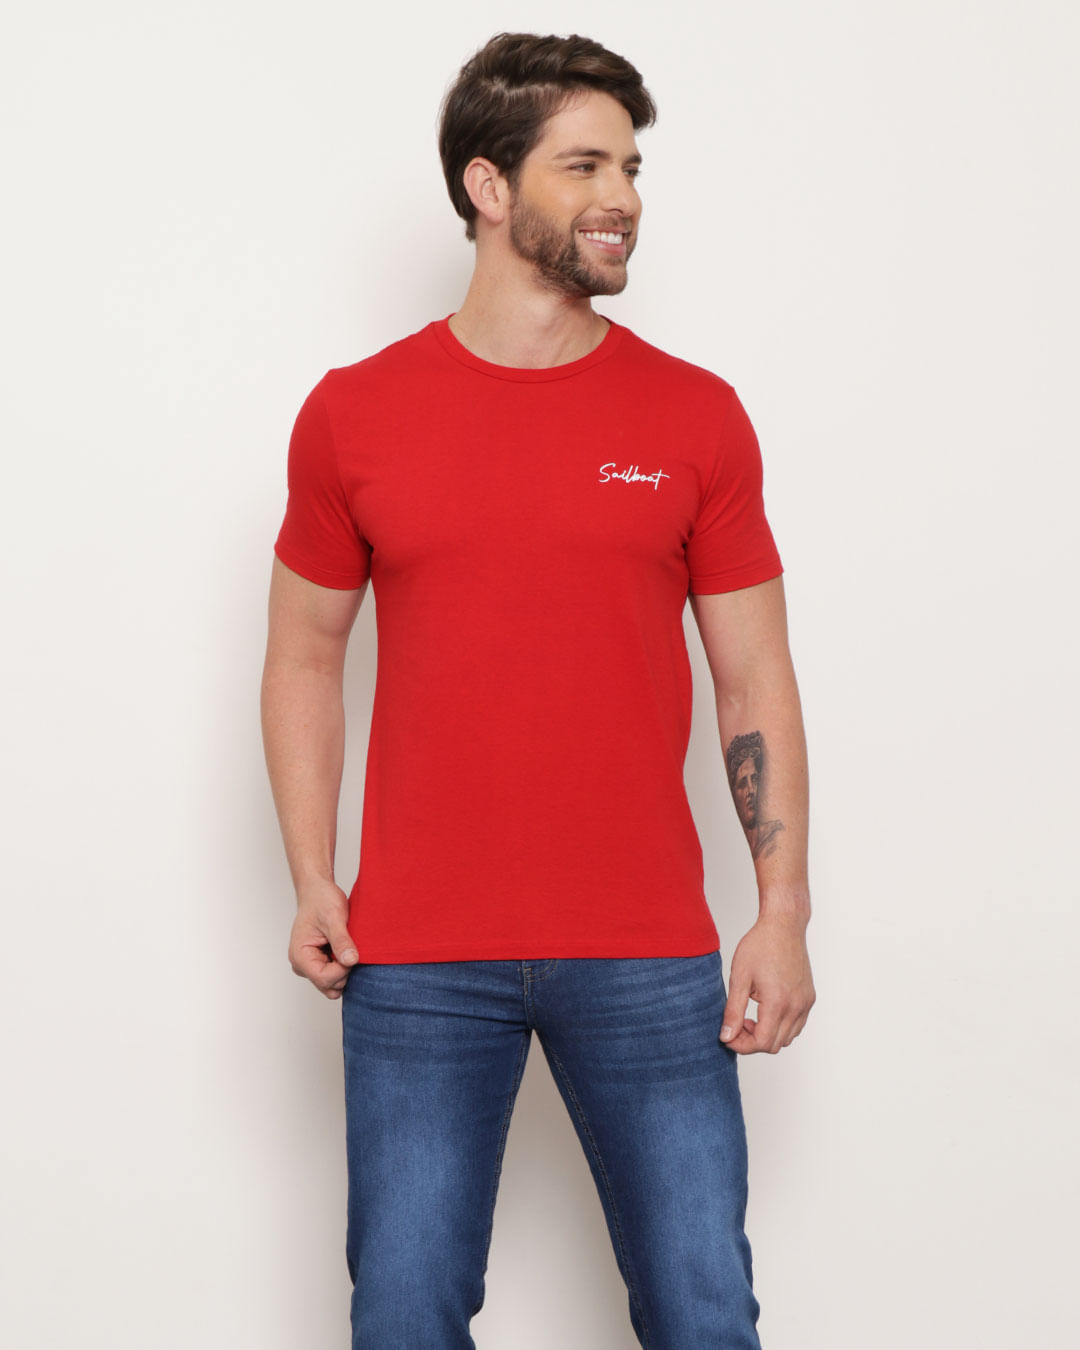 Camiseta Masculina Manga Curta Estampa Vermelha